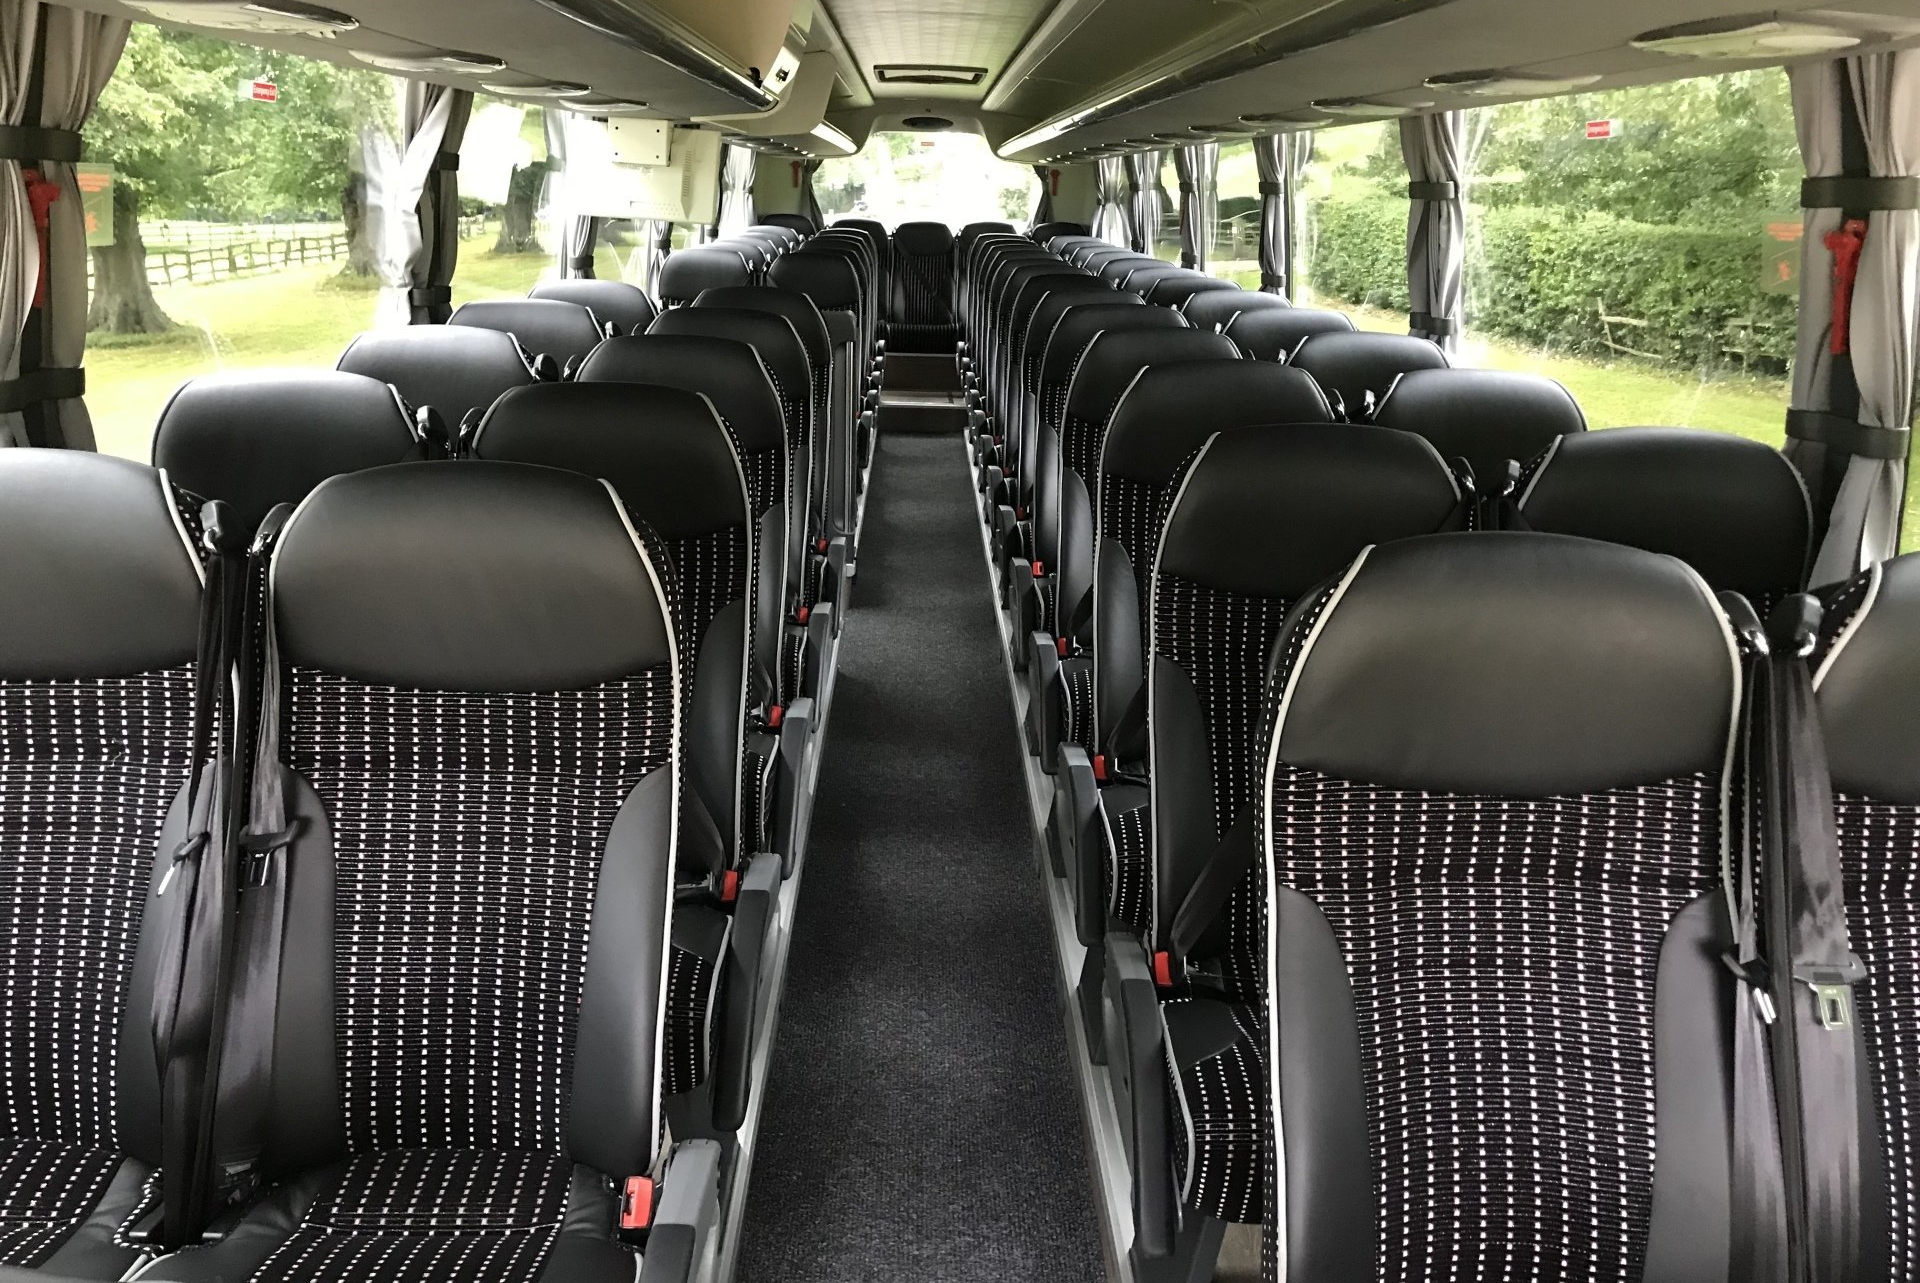 Our Executive 51 Seat Touring Coach interior